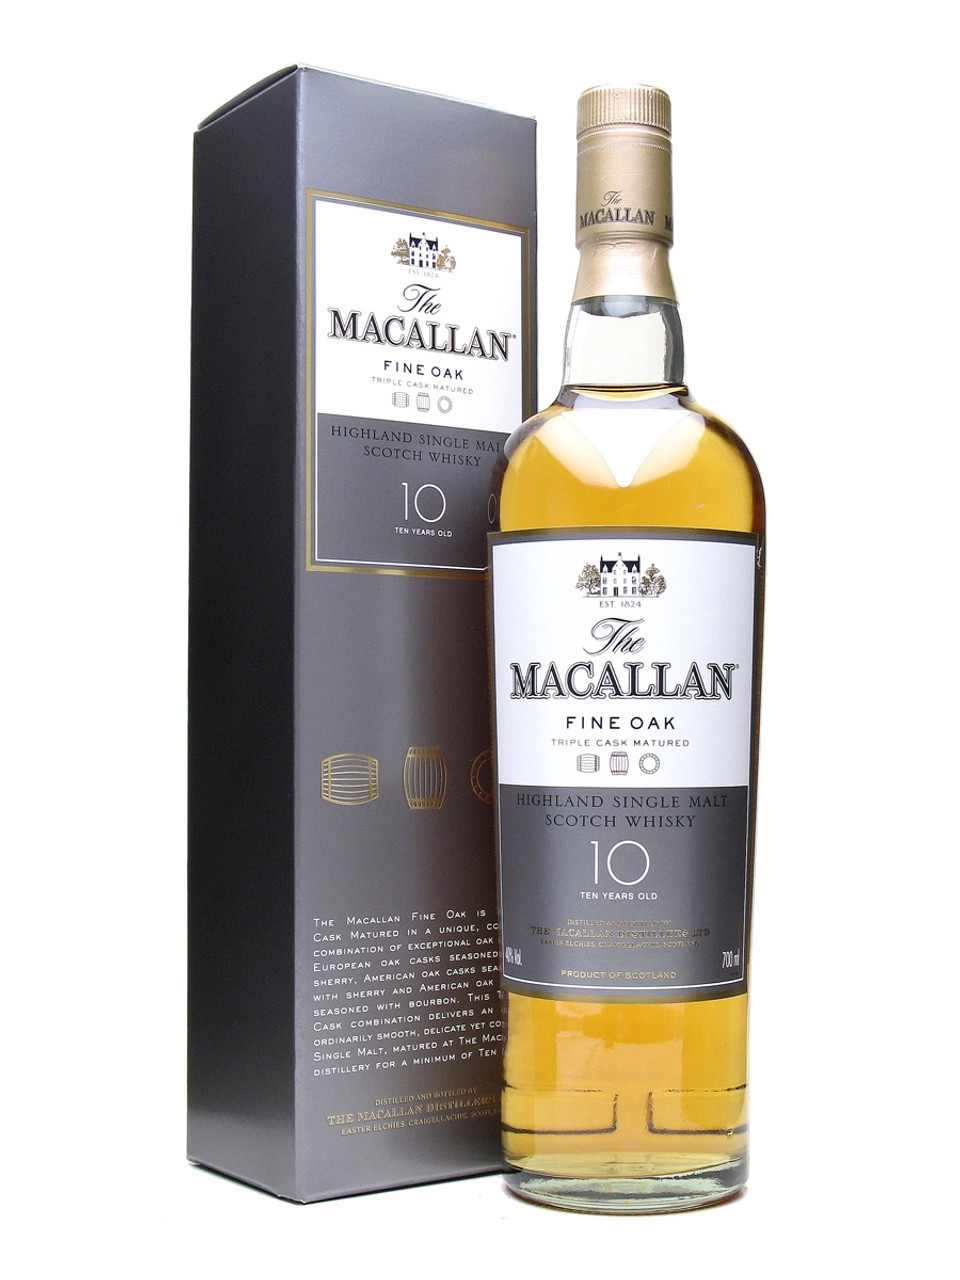 Macallan Highland Single Malt Scotch Whisky 10 Yr 750ml Glendale Liquor Store